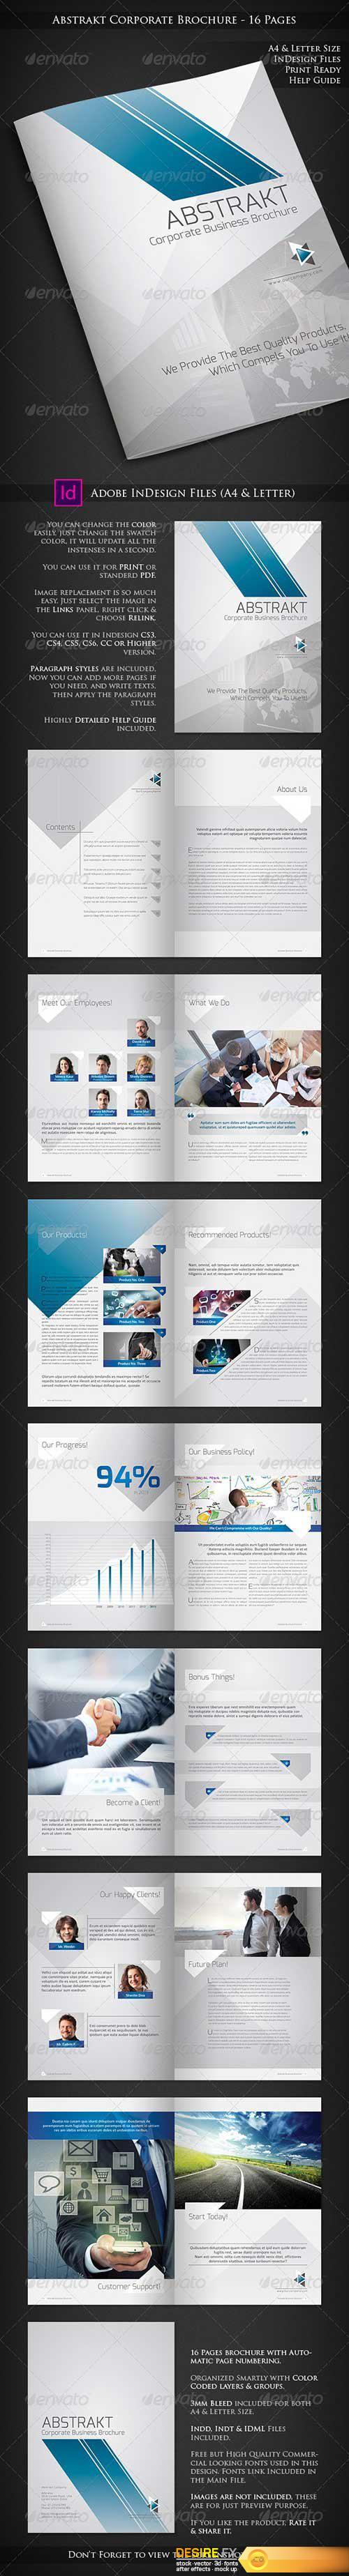 Graphicriver - Abstrakt - Corporate Brochure Design - 16 Pages 6746830